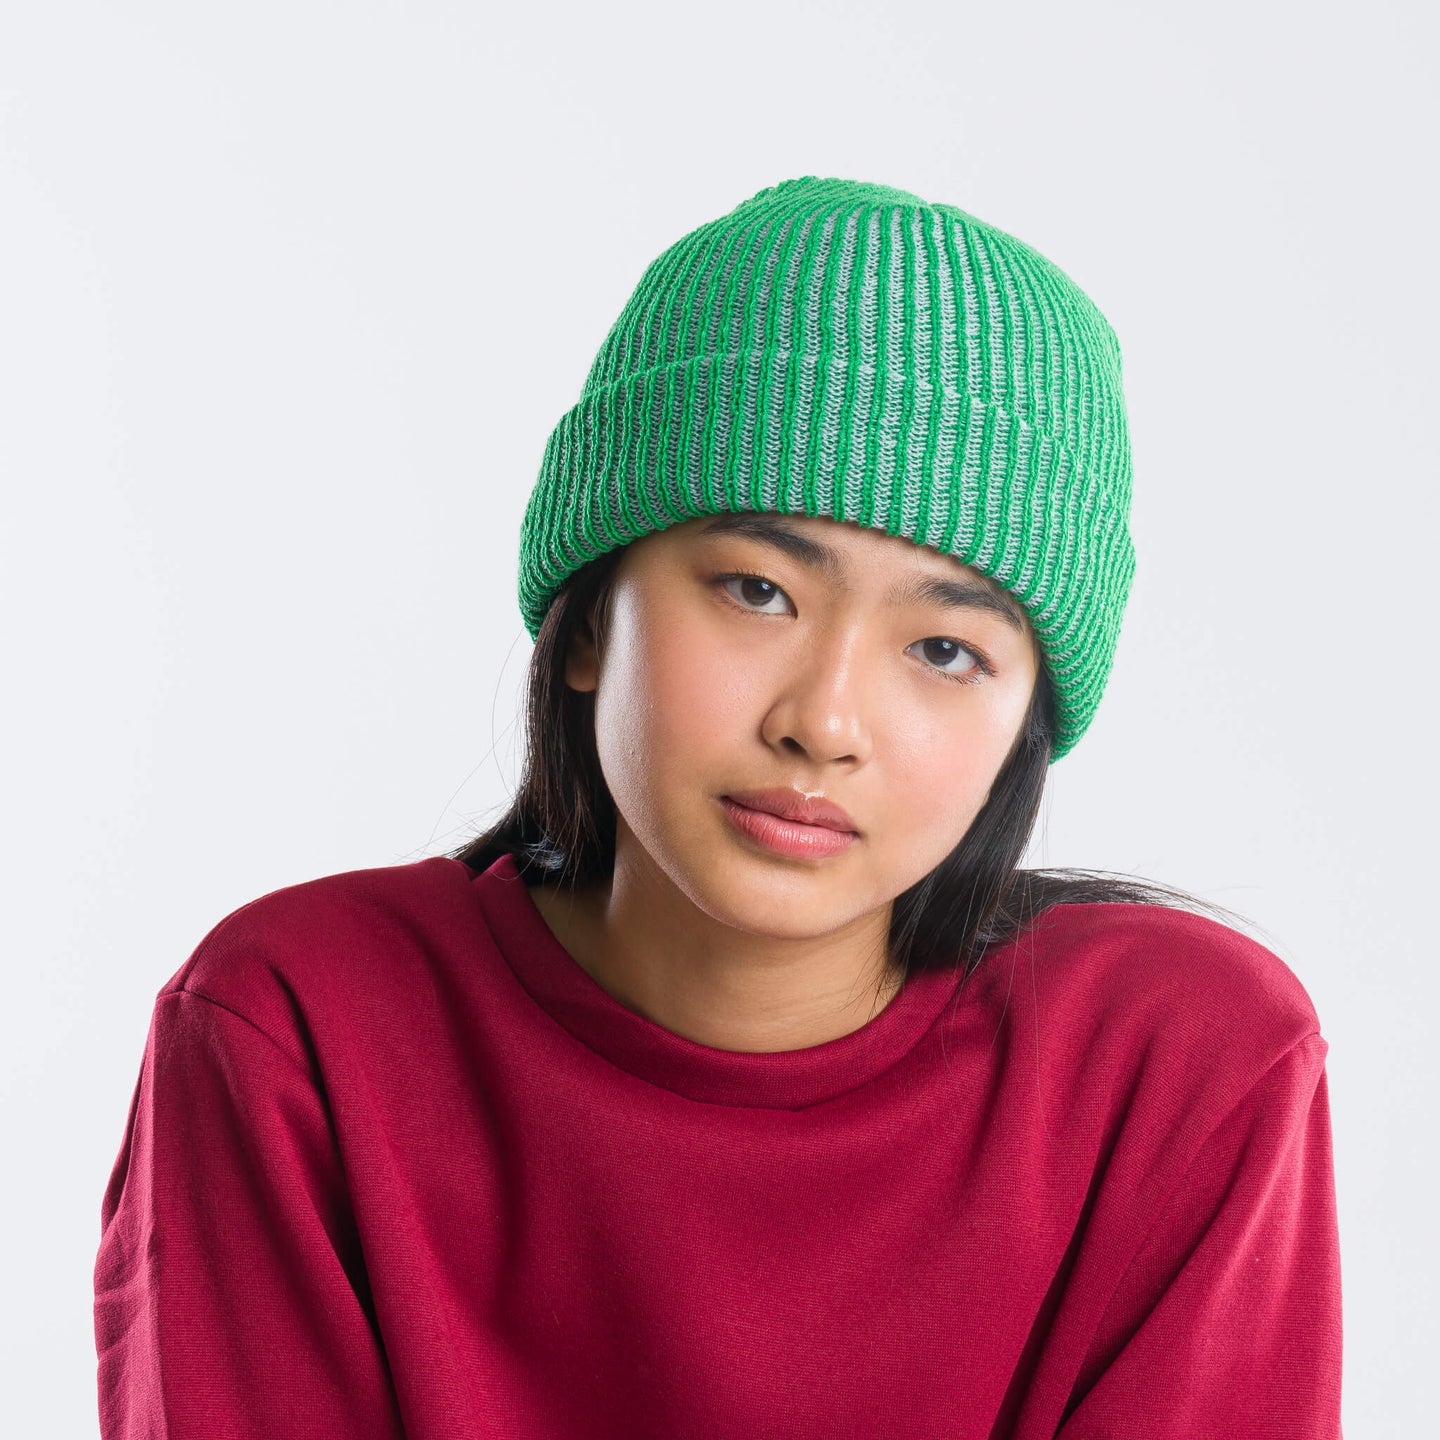 Simple Rib Knit Beanie Hat Colorful Soft